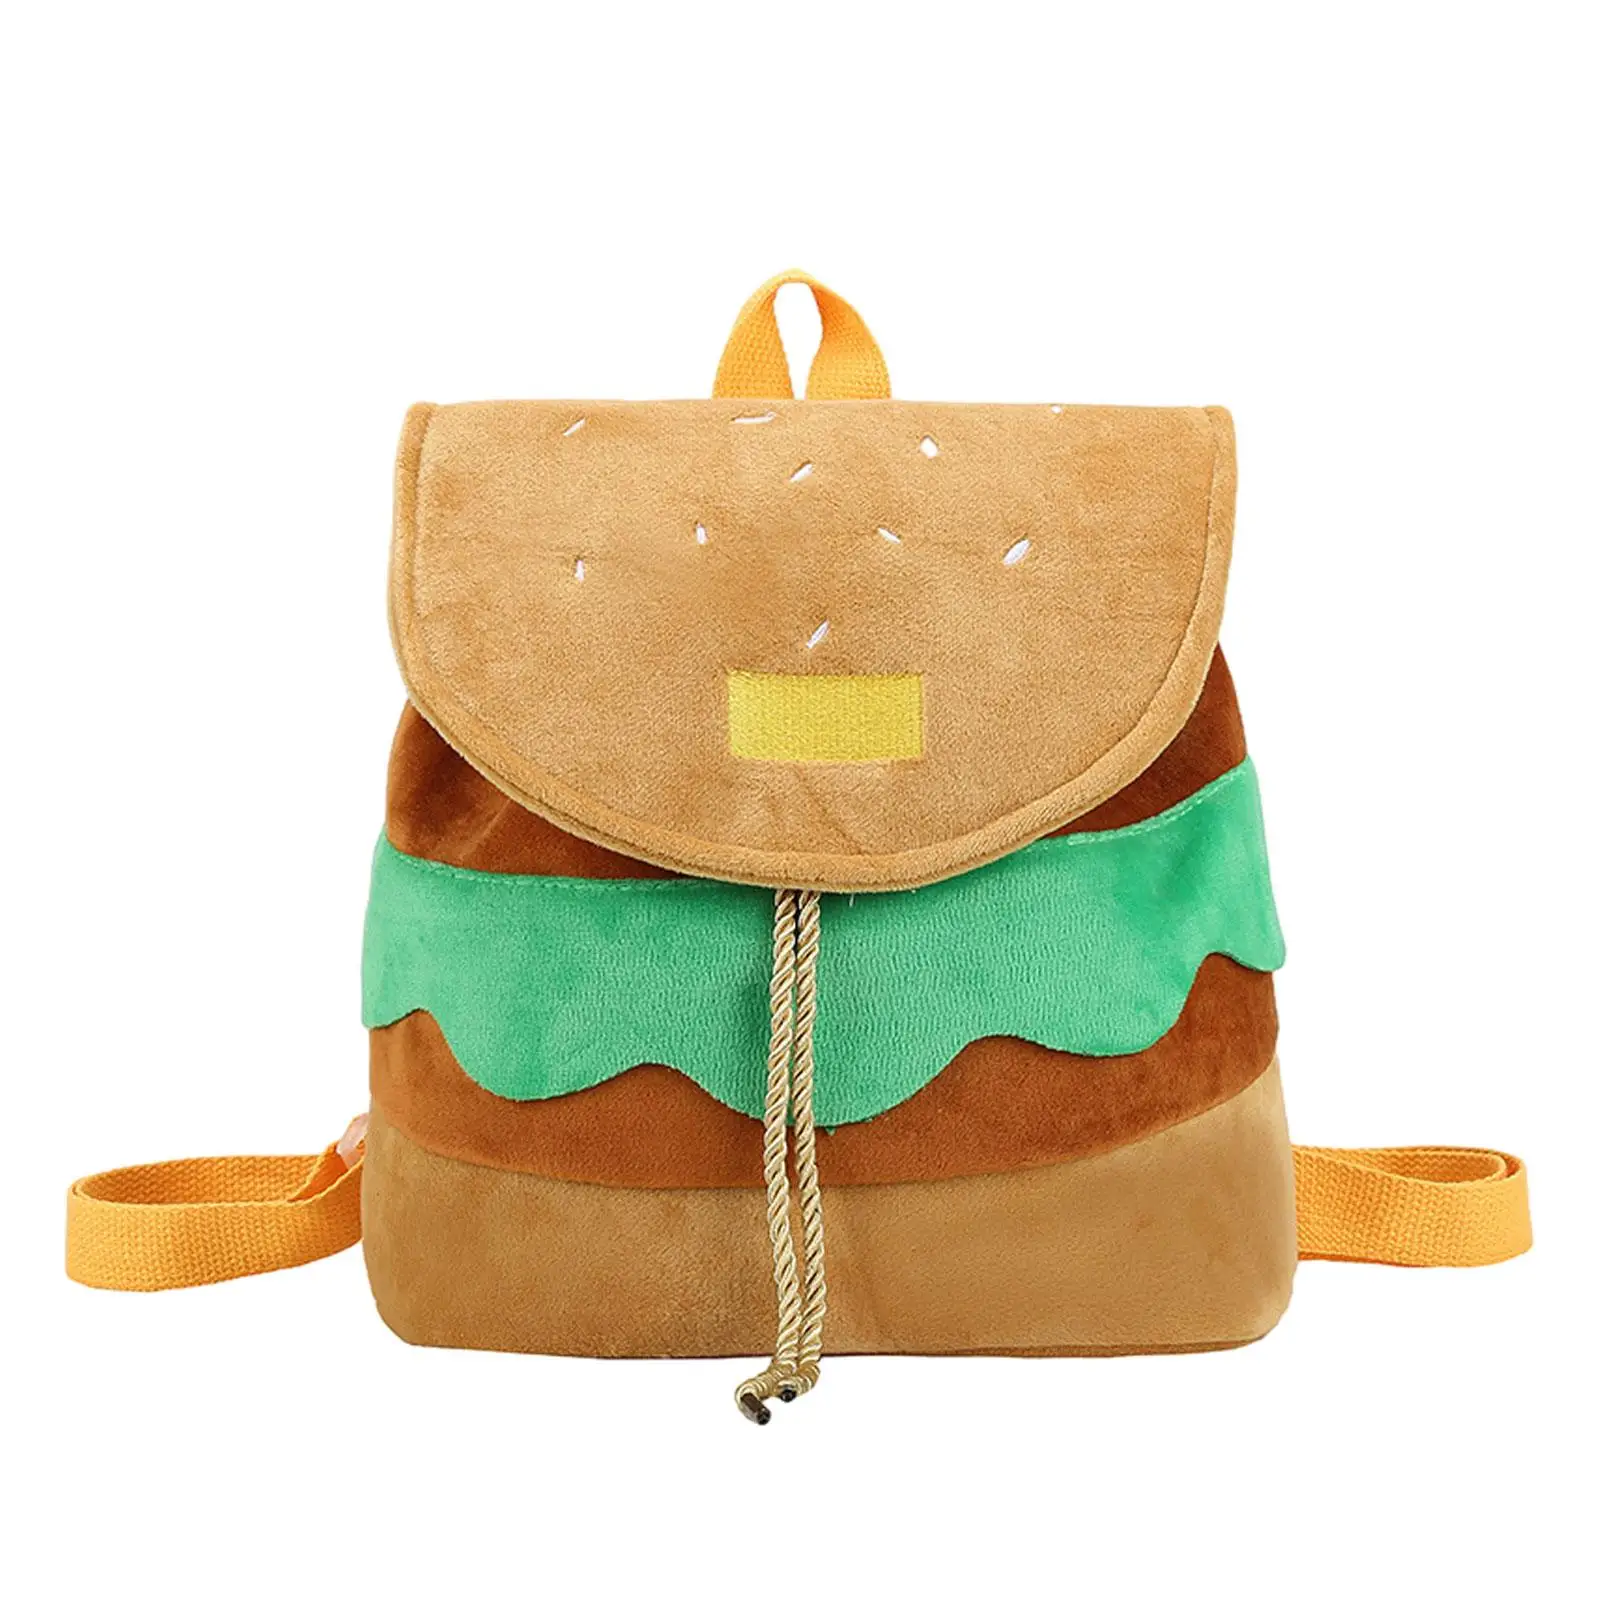 Hamburger Backpack Daypack for Travel School Bag for Girls Boys Women Adults